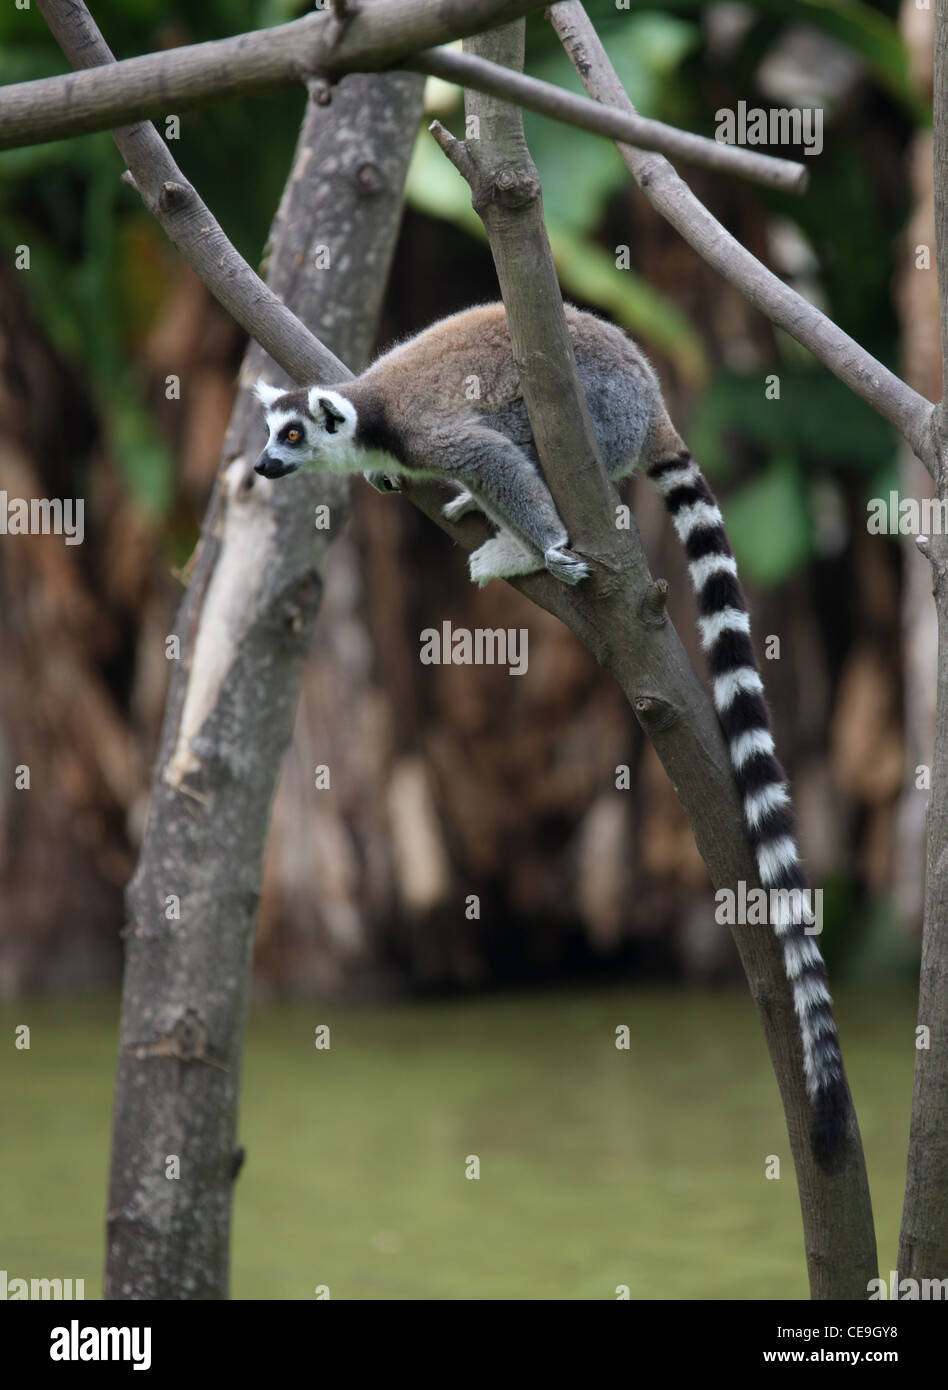 Ring-tailed Lemurs, Lemur catta, Lemuridae, Primates. Madagascar, Africa. Stock Photo